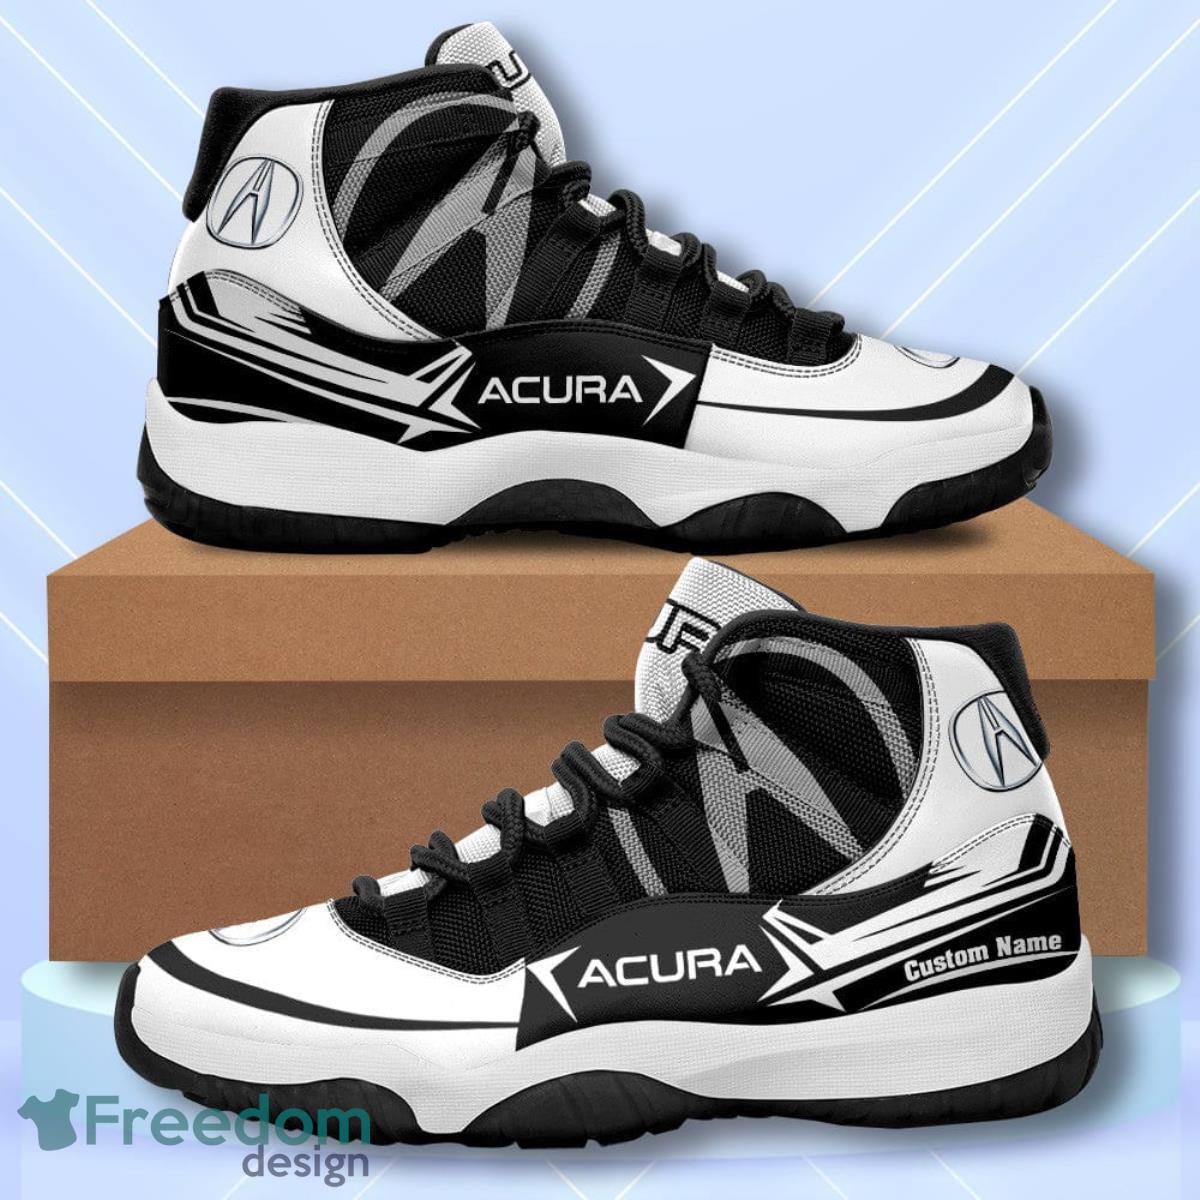 Acura Custom Name Air Jordan 11  Sneakers Vintage Shoes Product Photo 1